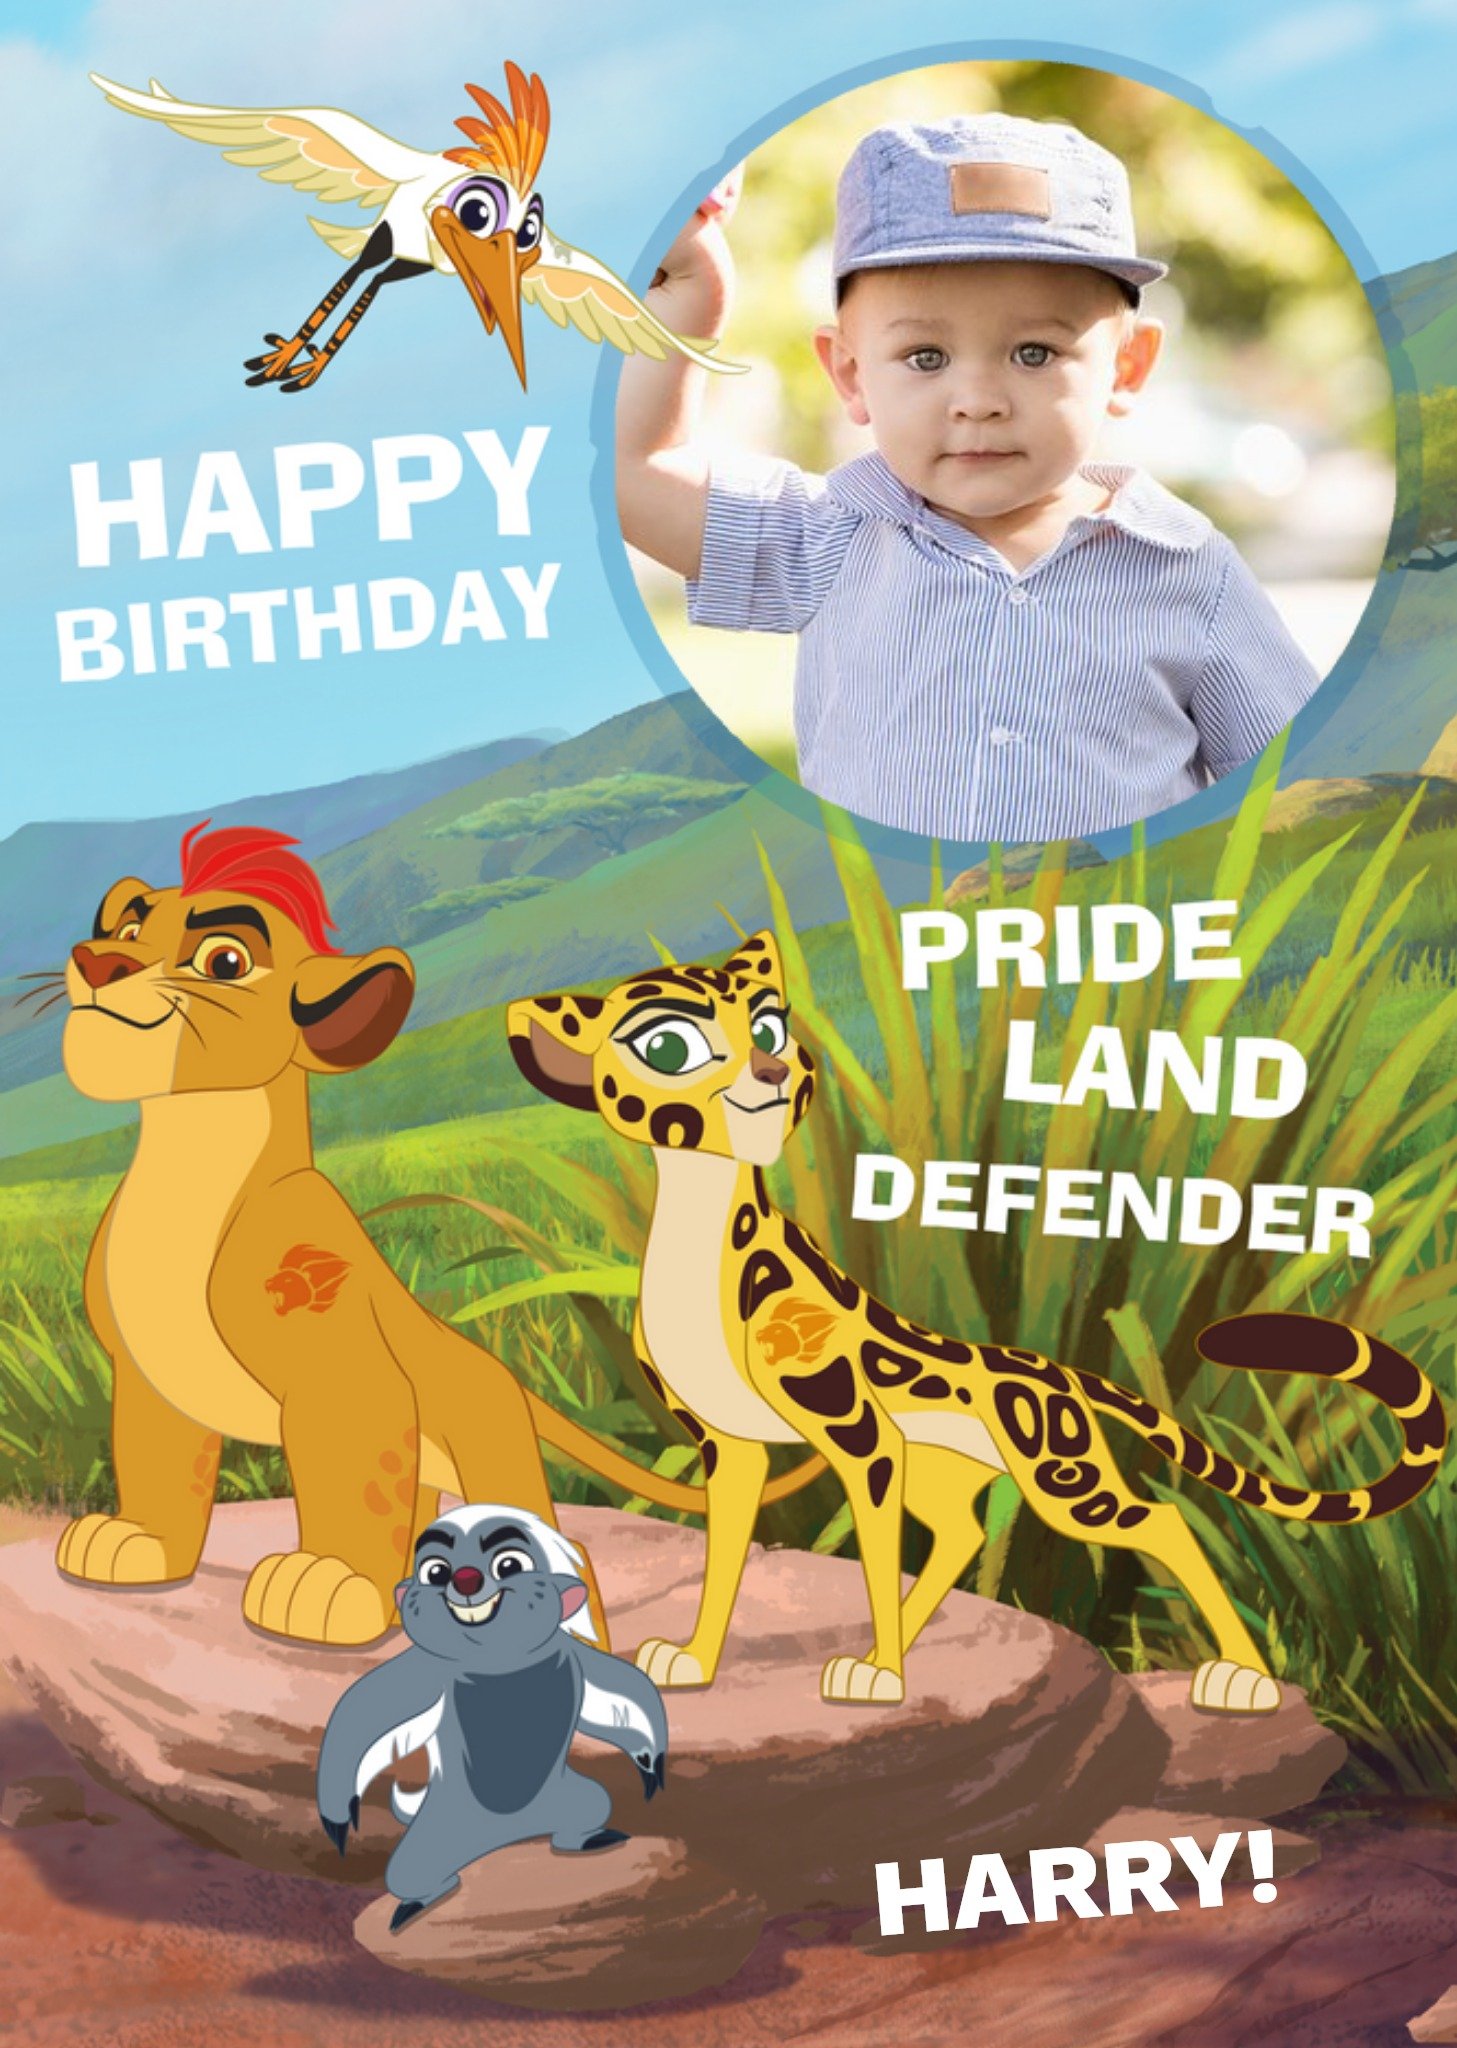 Disney The Lion King Land Defender Personalised Photo Upload Happy Birthday Card, Large